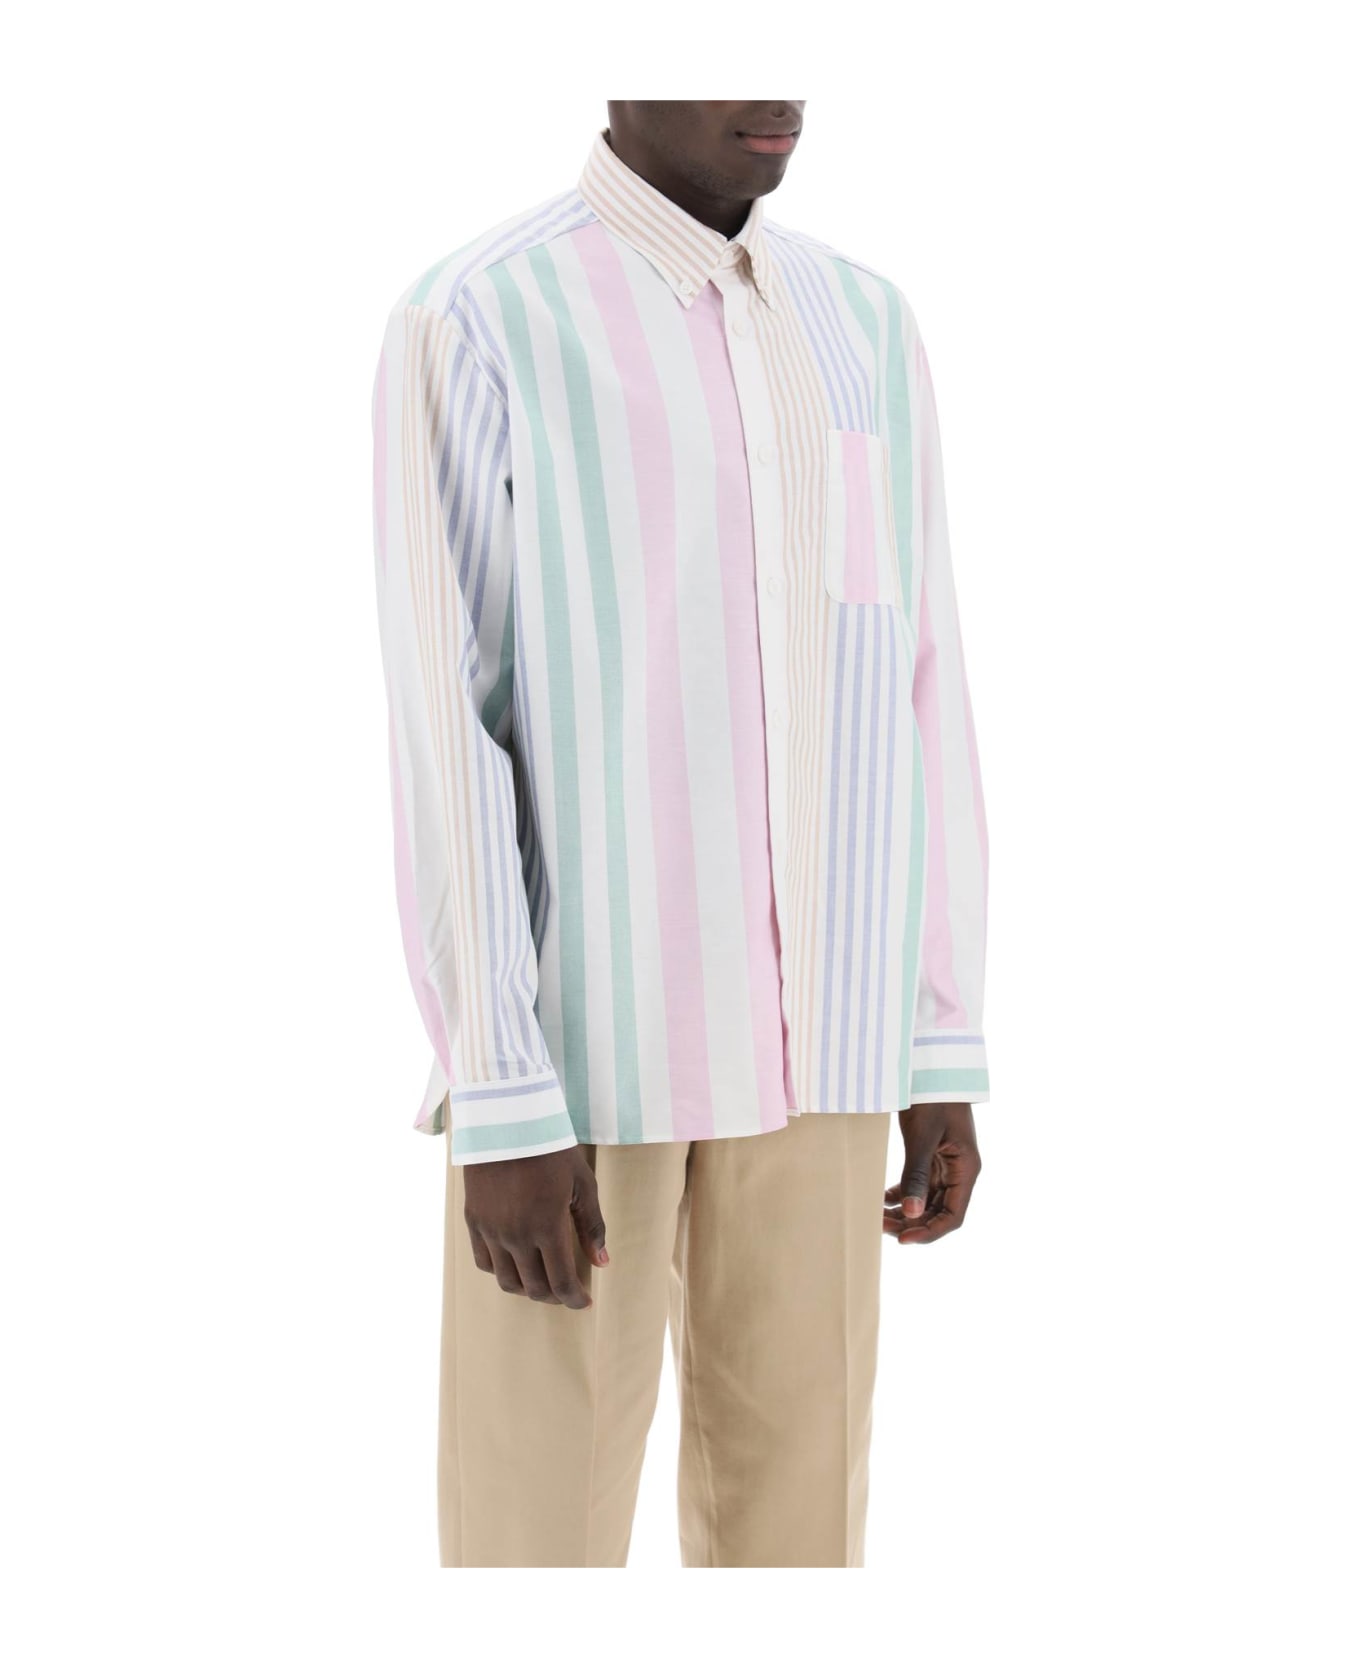 A.P.C. Mateo Striped Oxford Shirt - Saa Multicolor